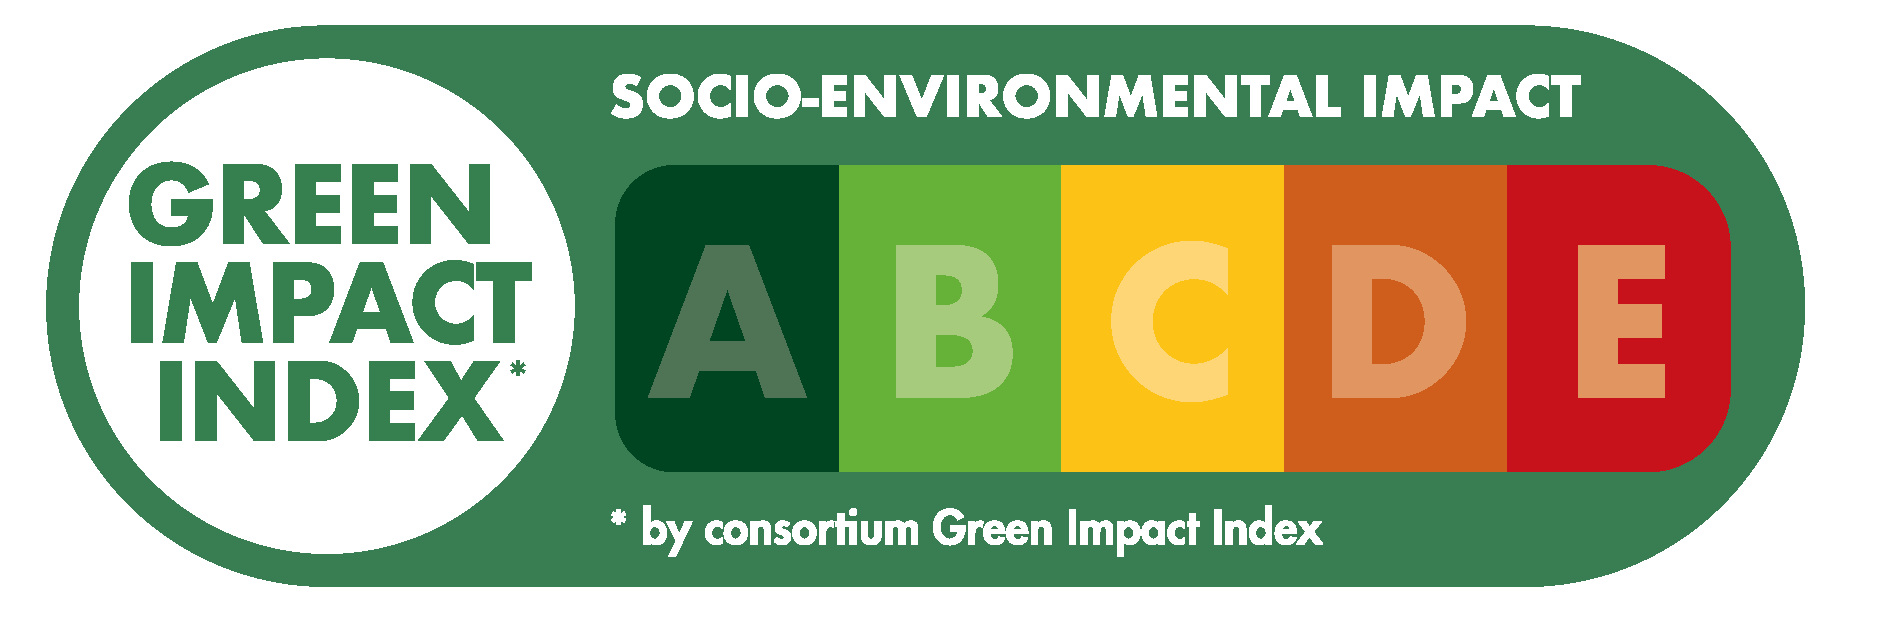 kl_green-impact-index_gii_fr_no-background